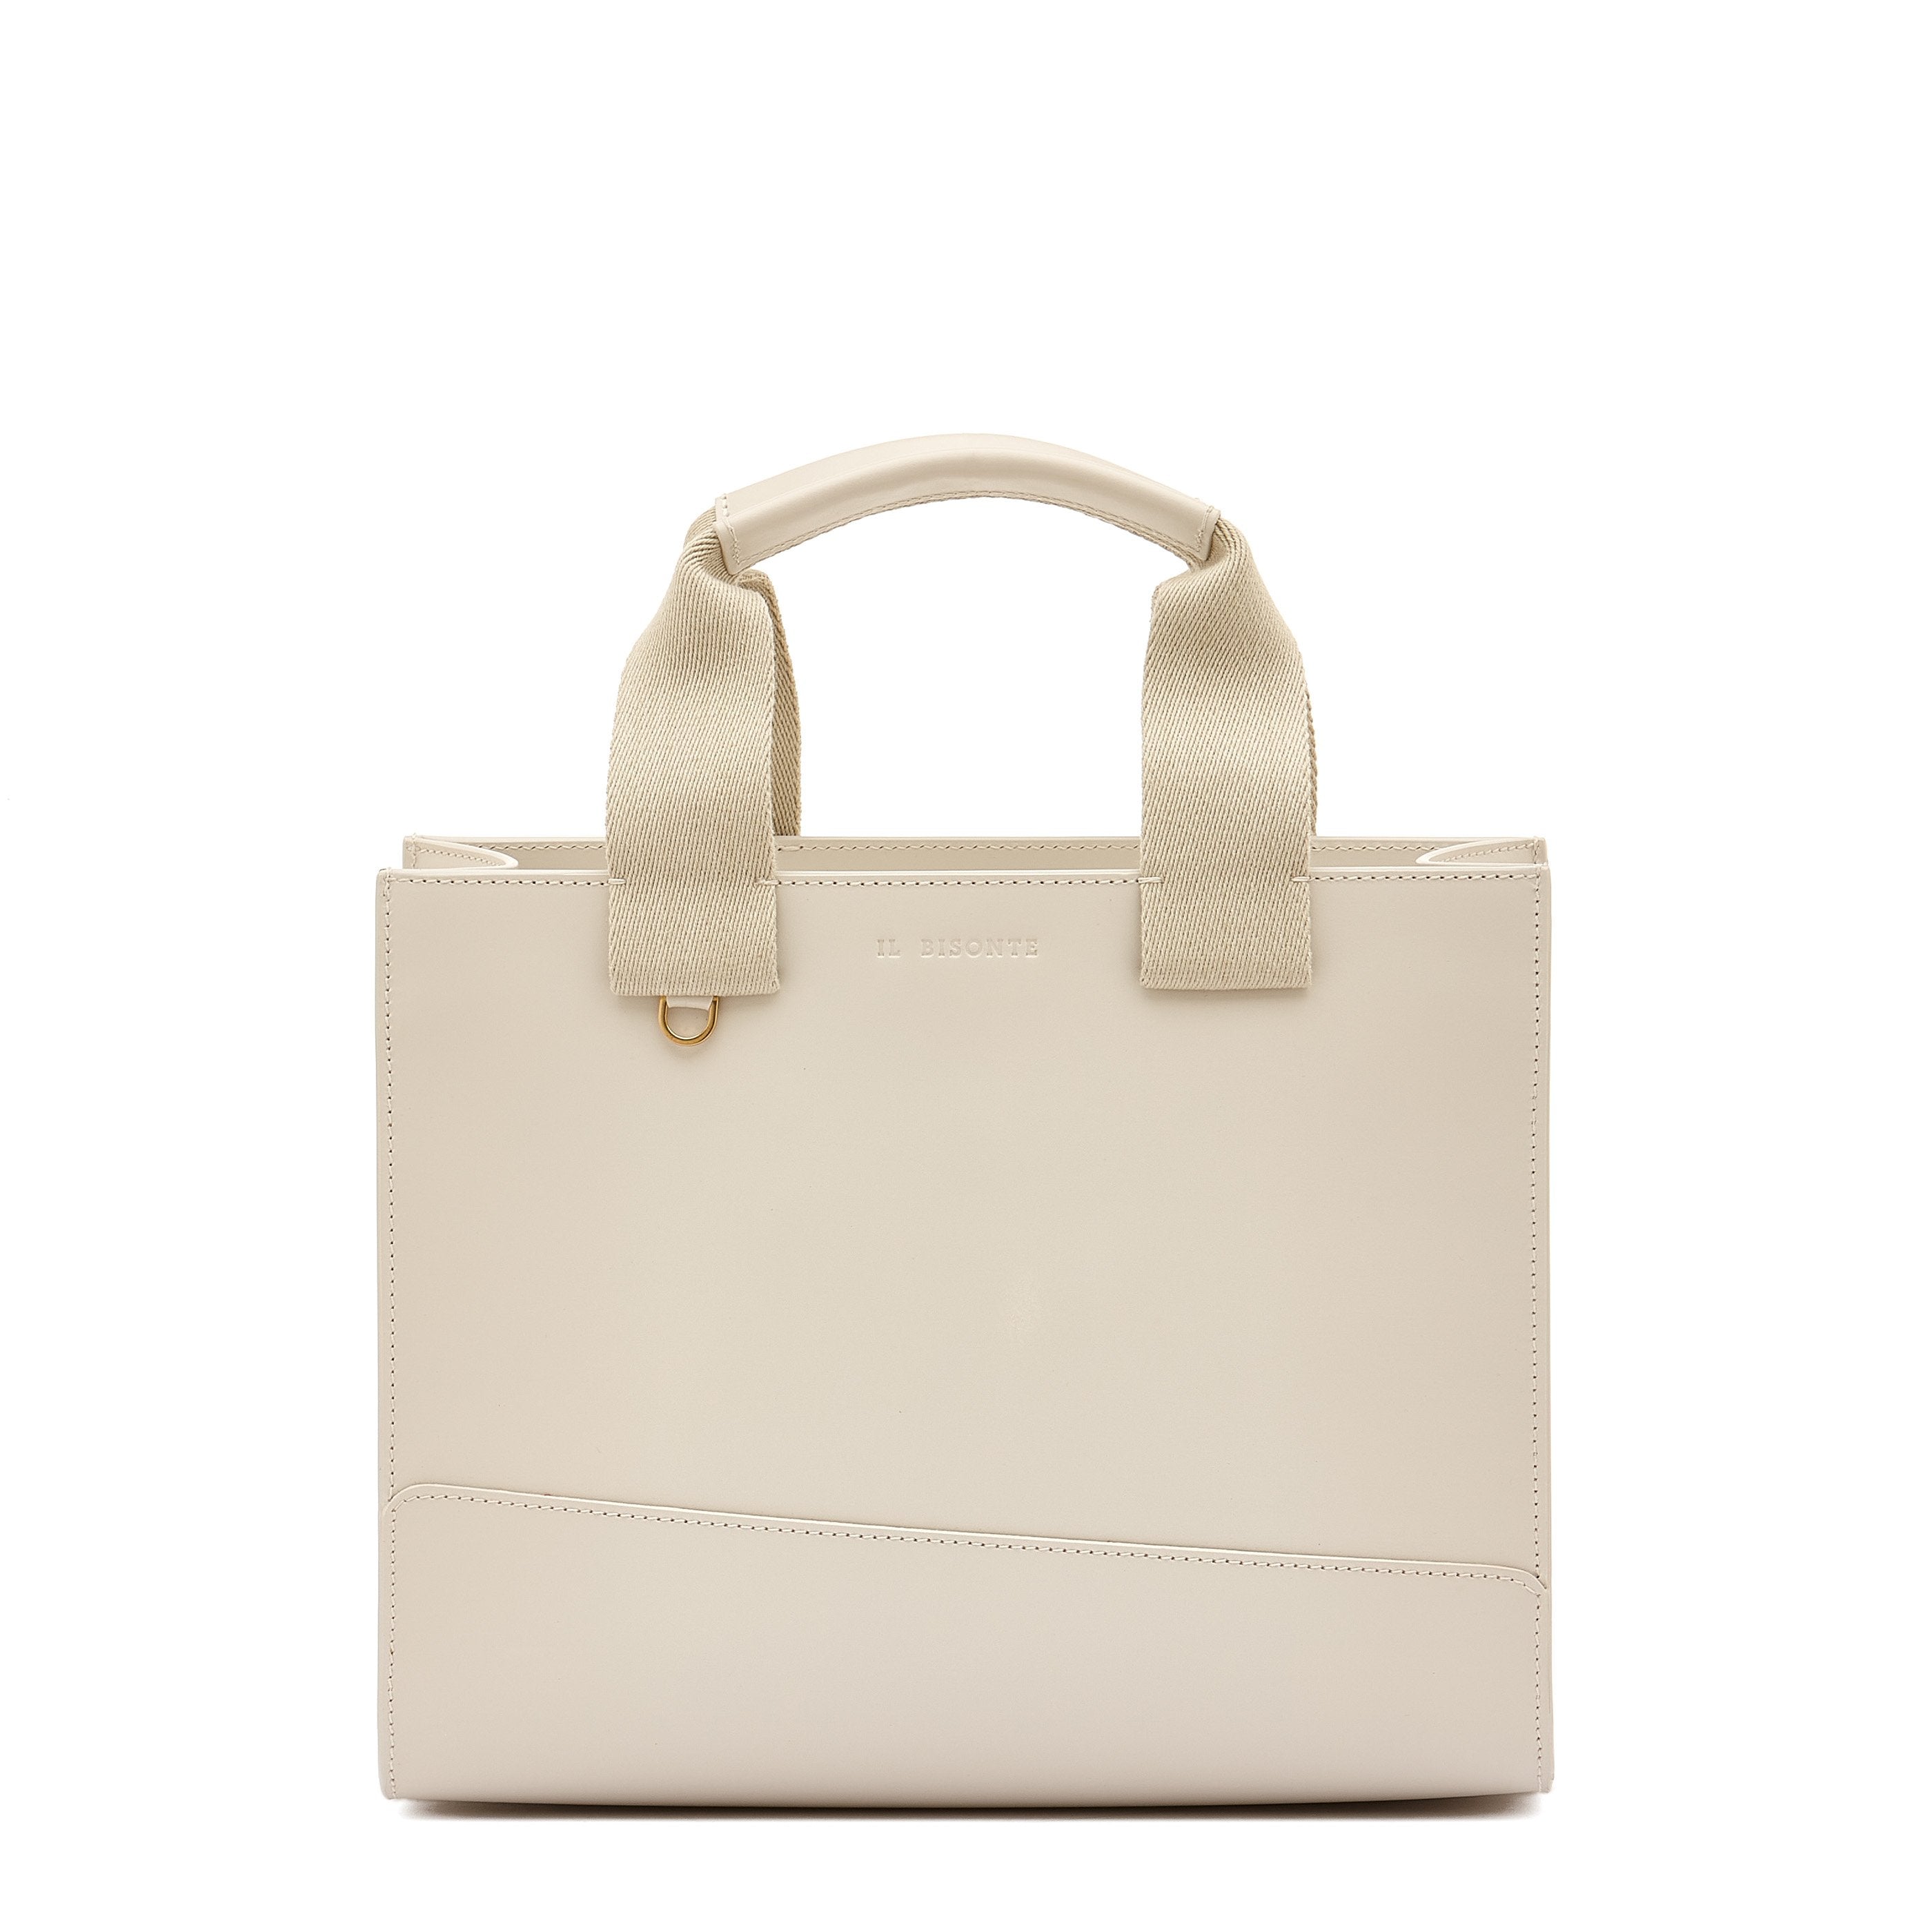 Sole Medium | Women's handbag in leather color white seal – Il Bisonte